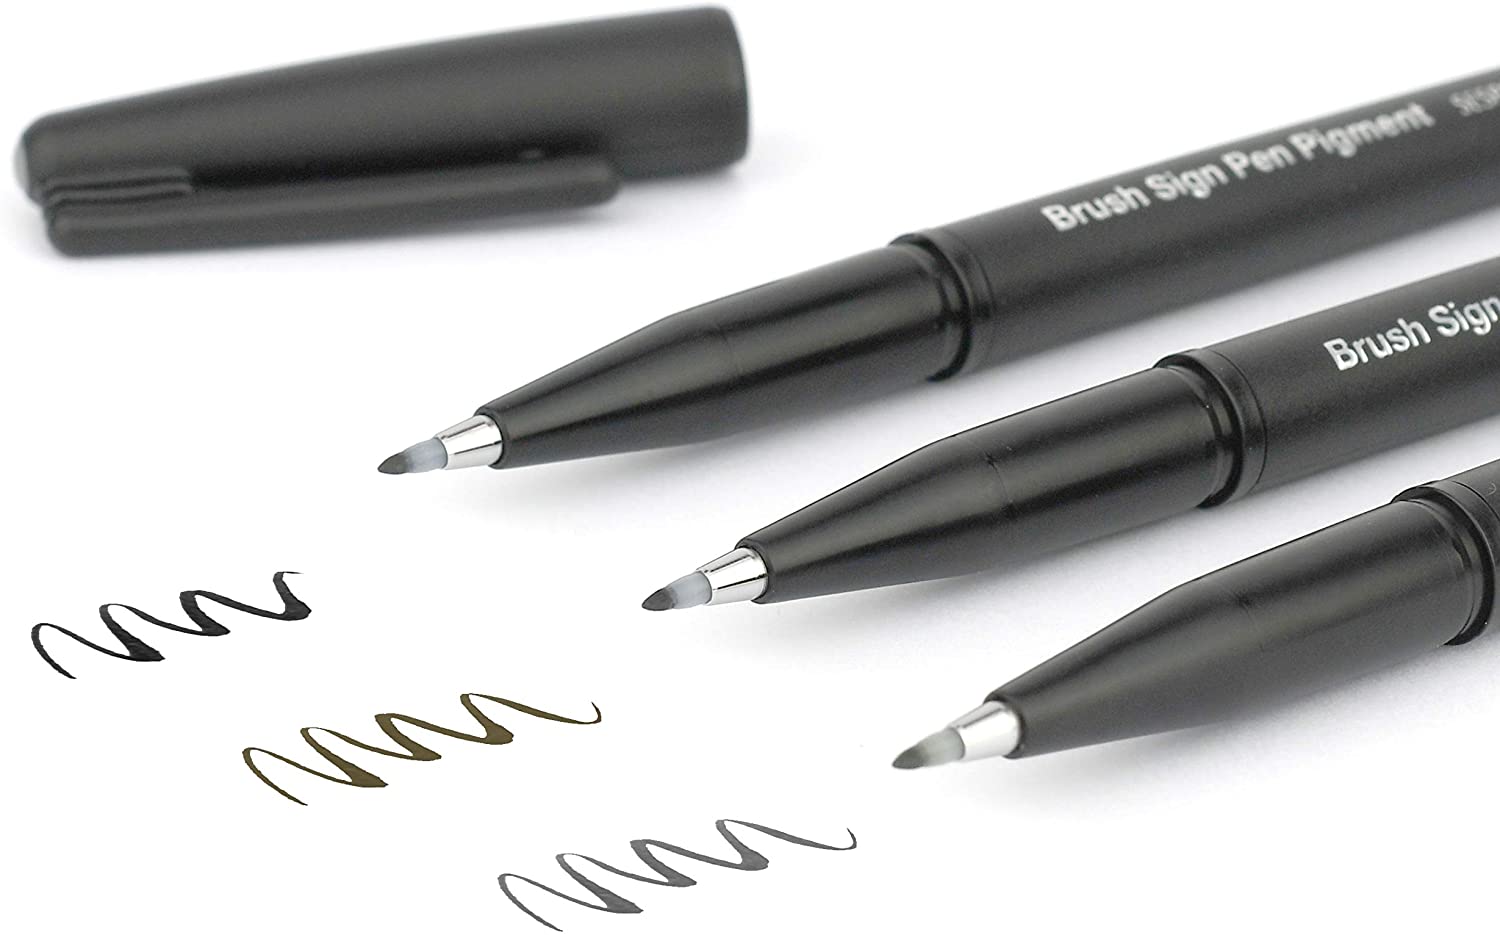 Sign pen. Pentel Brush sign Pen. Pentel маркер Brush sign Pen. Brush sign Pen Pigment sesp15. Ручка Pentel Black Brush.